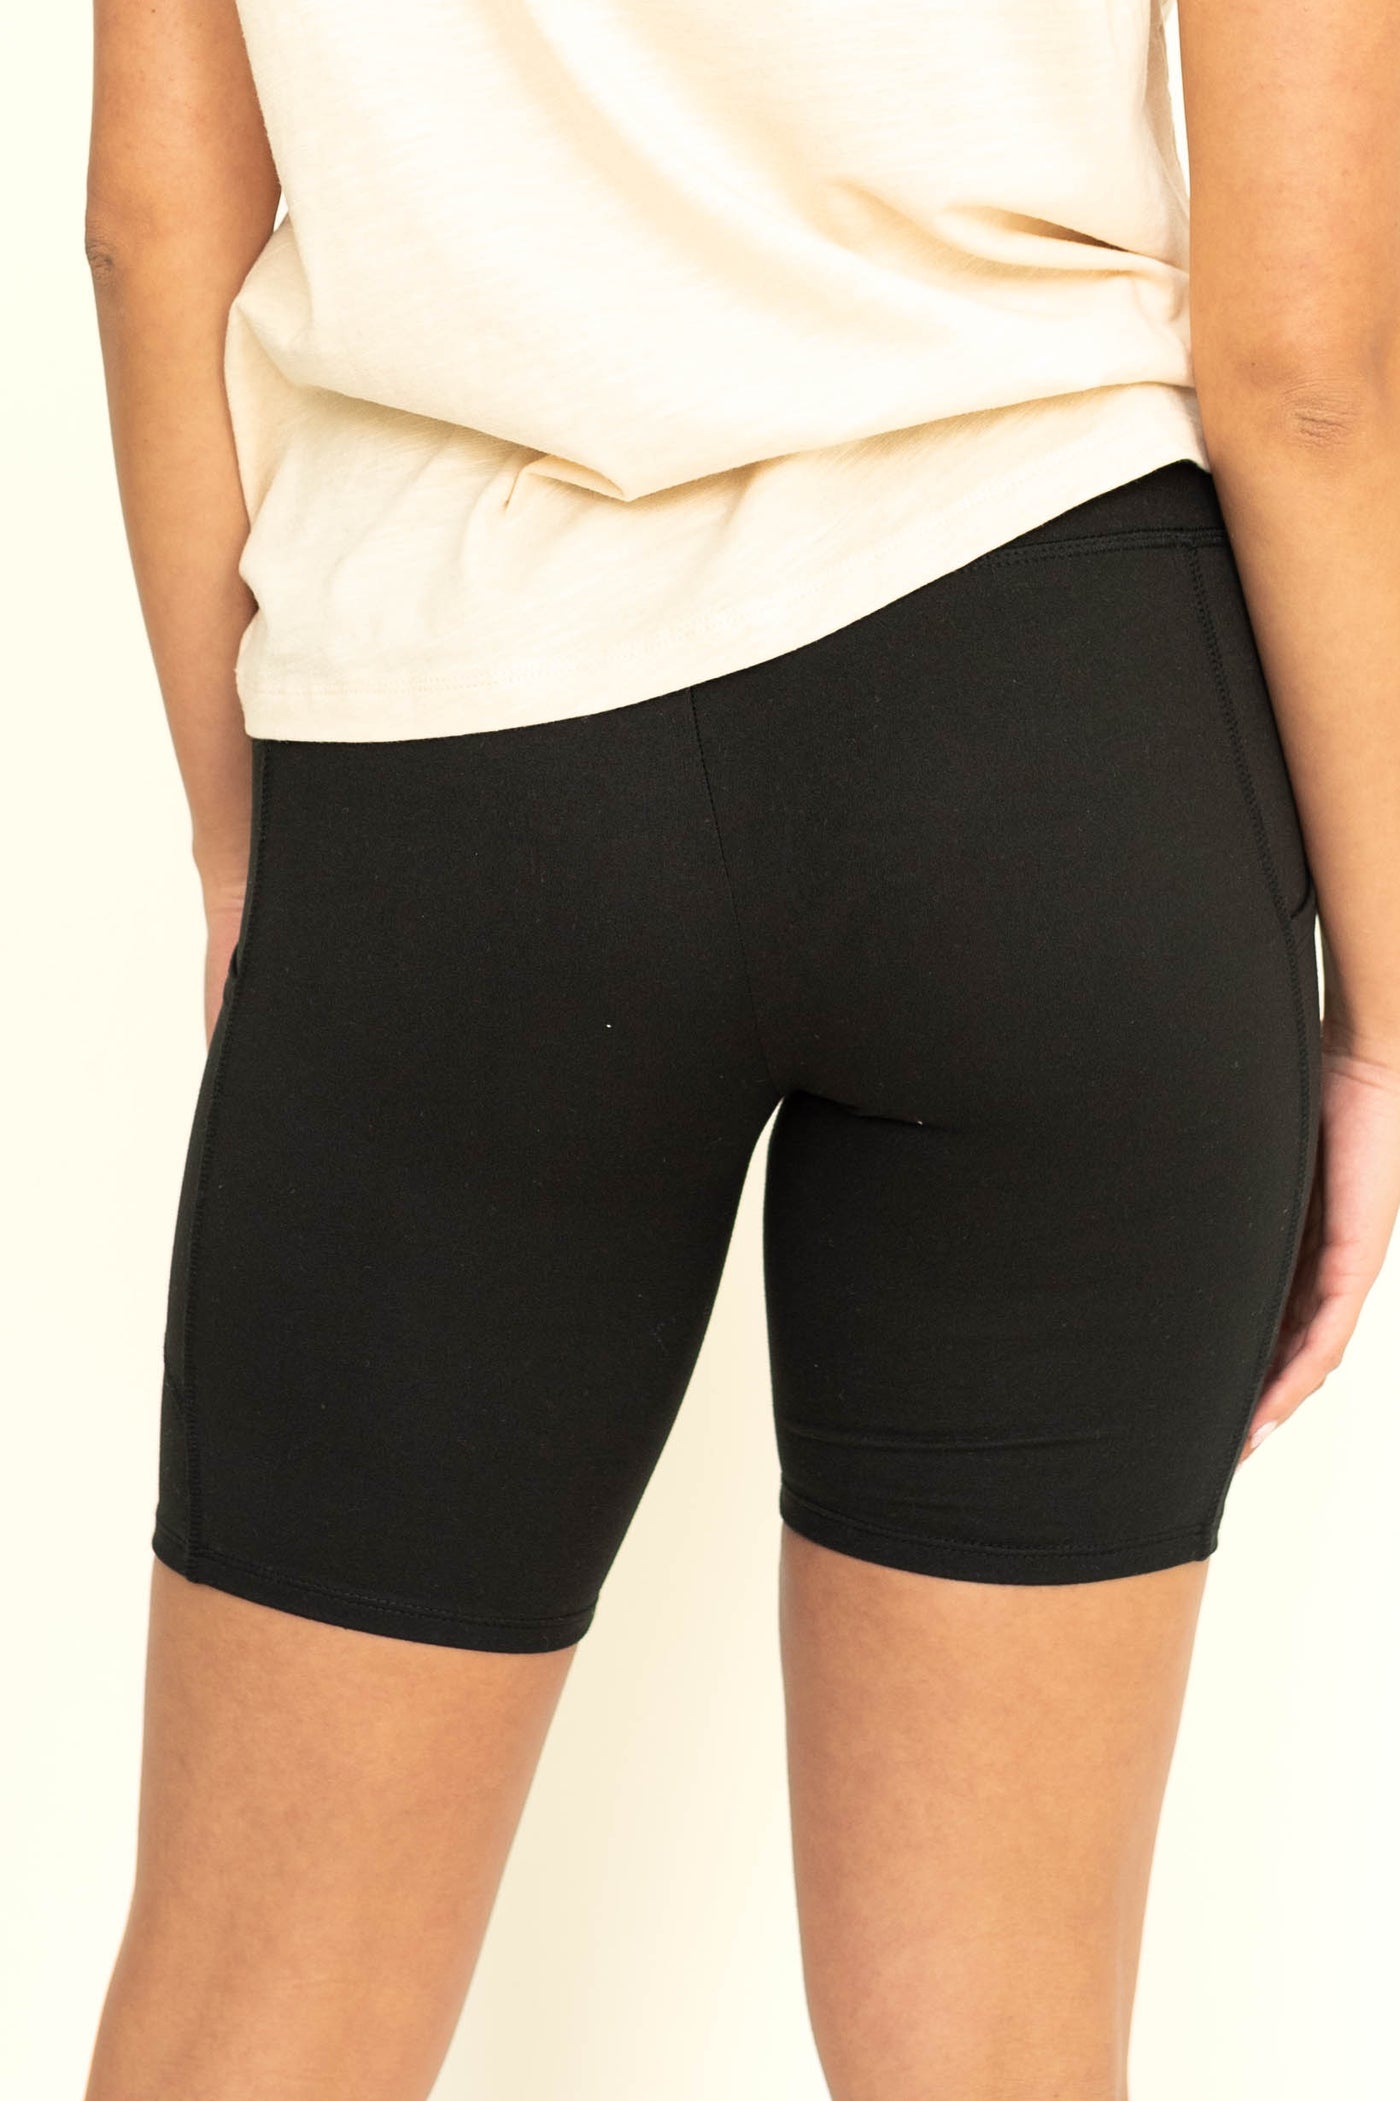 Back view of  black bike shorts